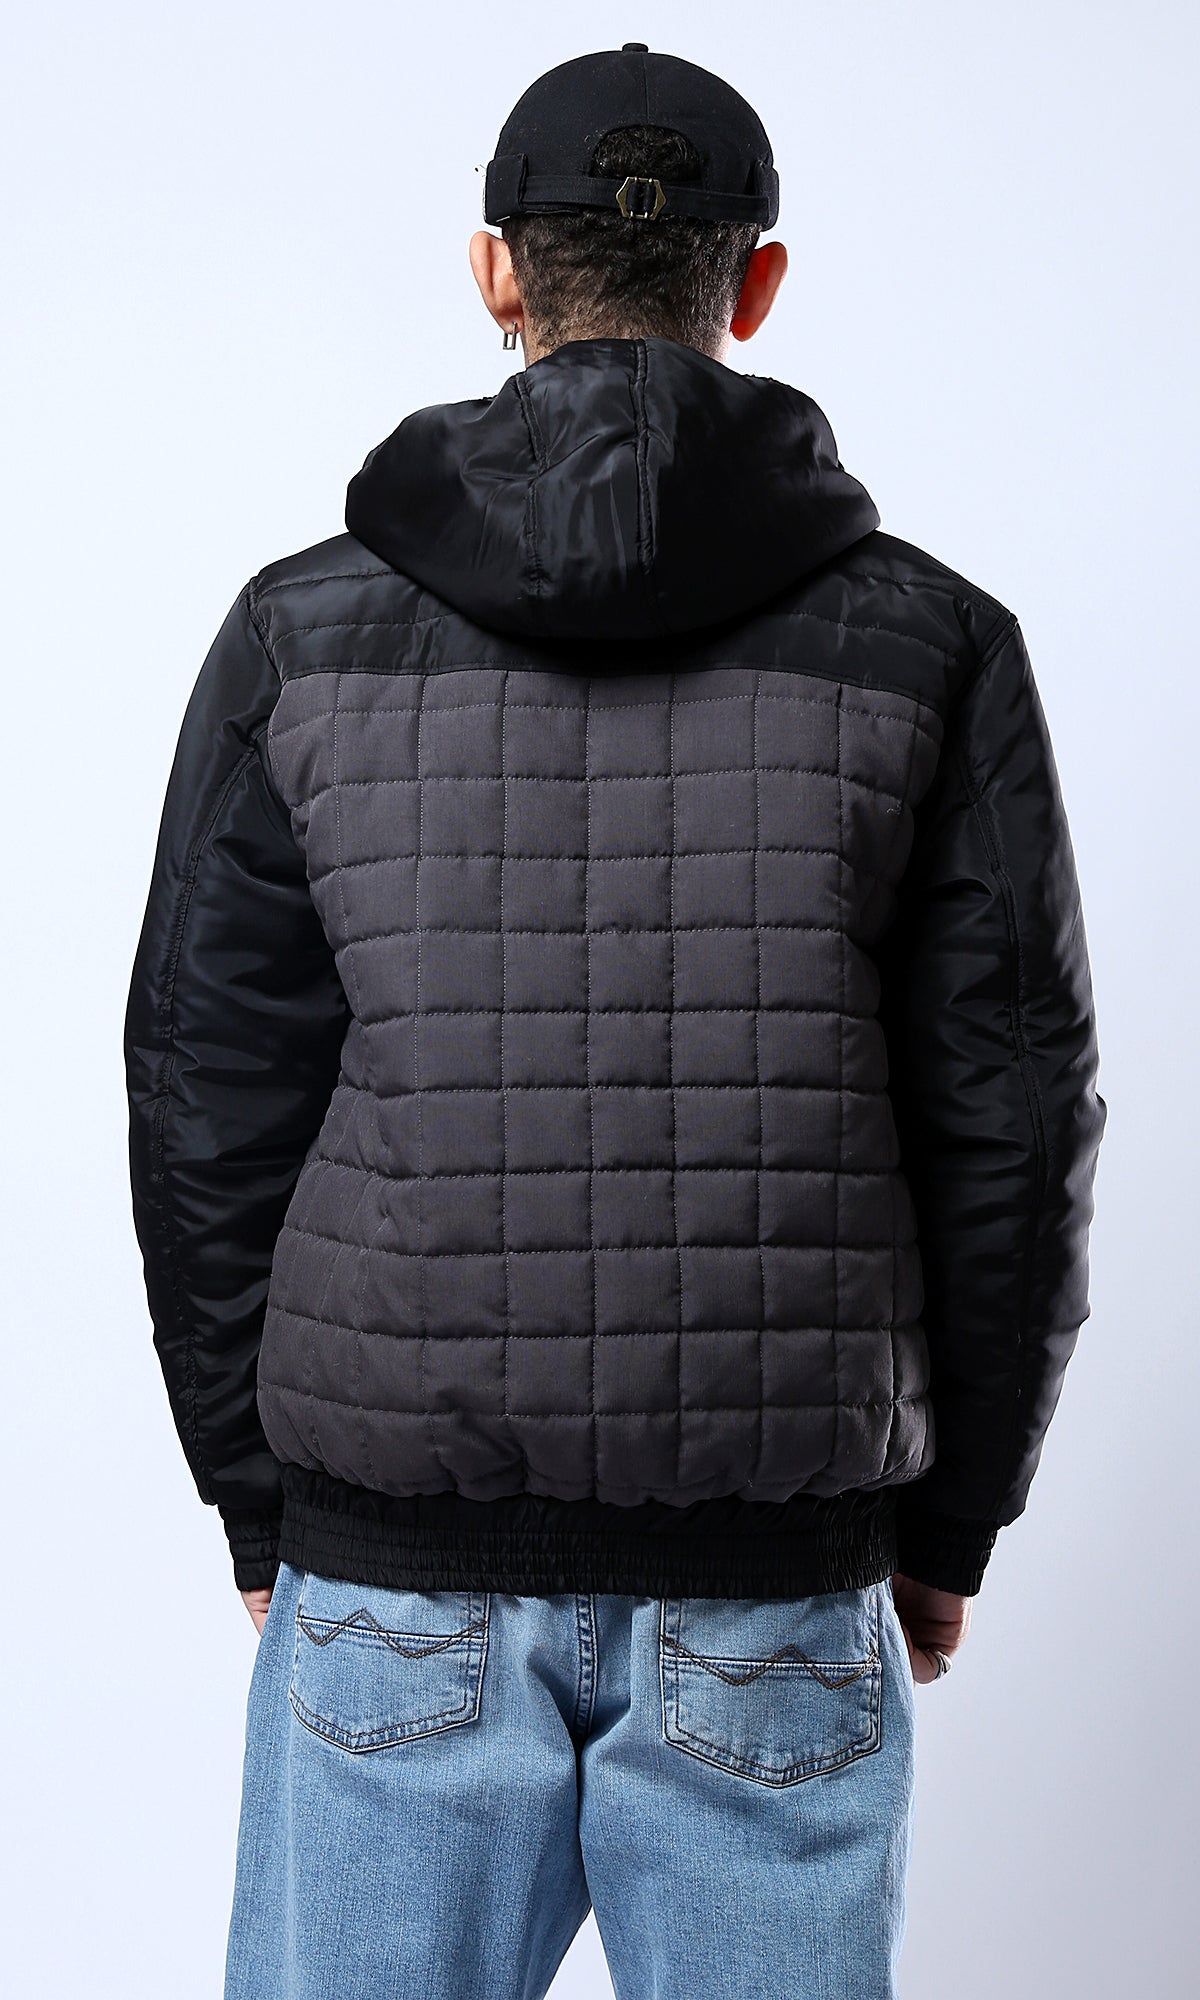 O175348 Bi-Tone Grey & Black Quilted Zipped Jacket